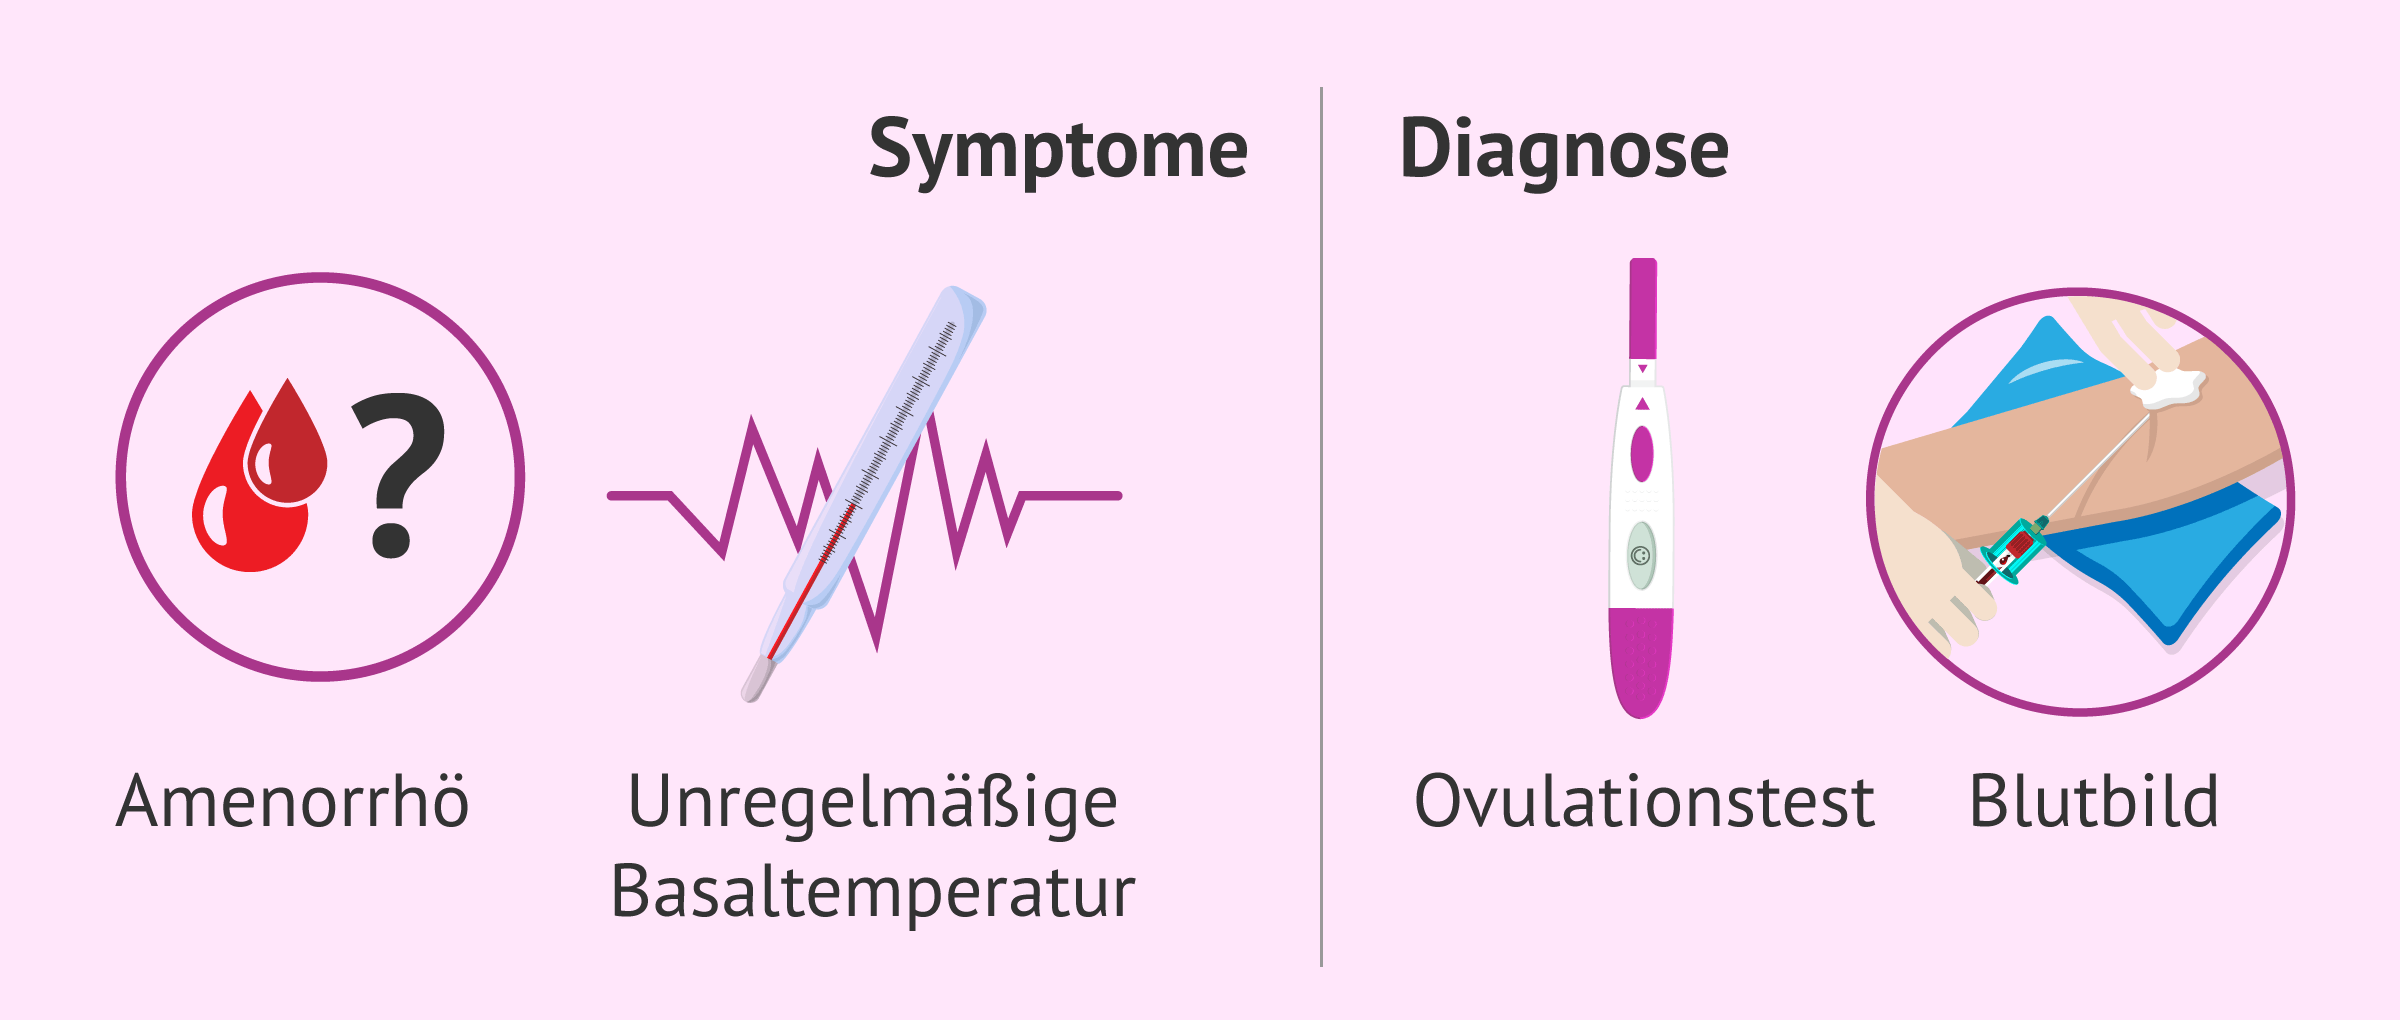 Symptome und Diagnose bei Anovulation